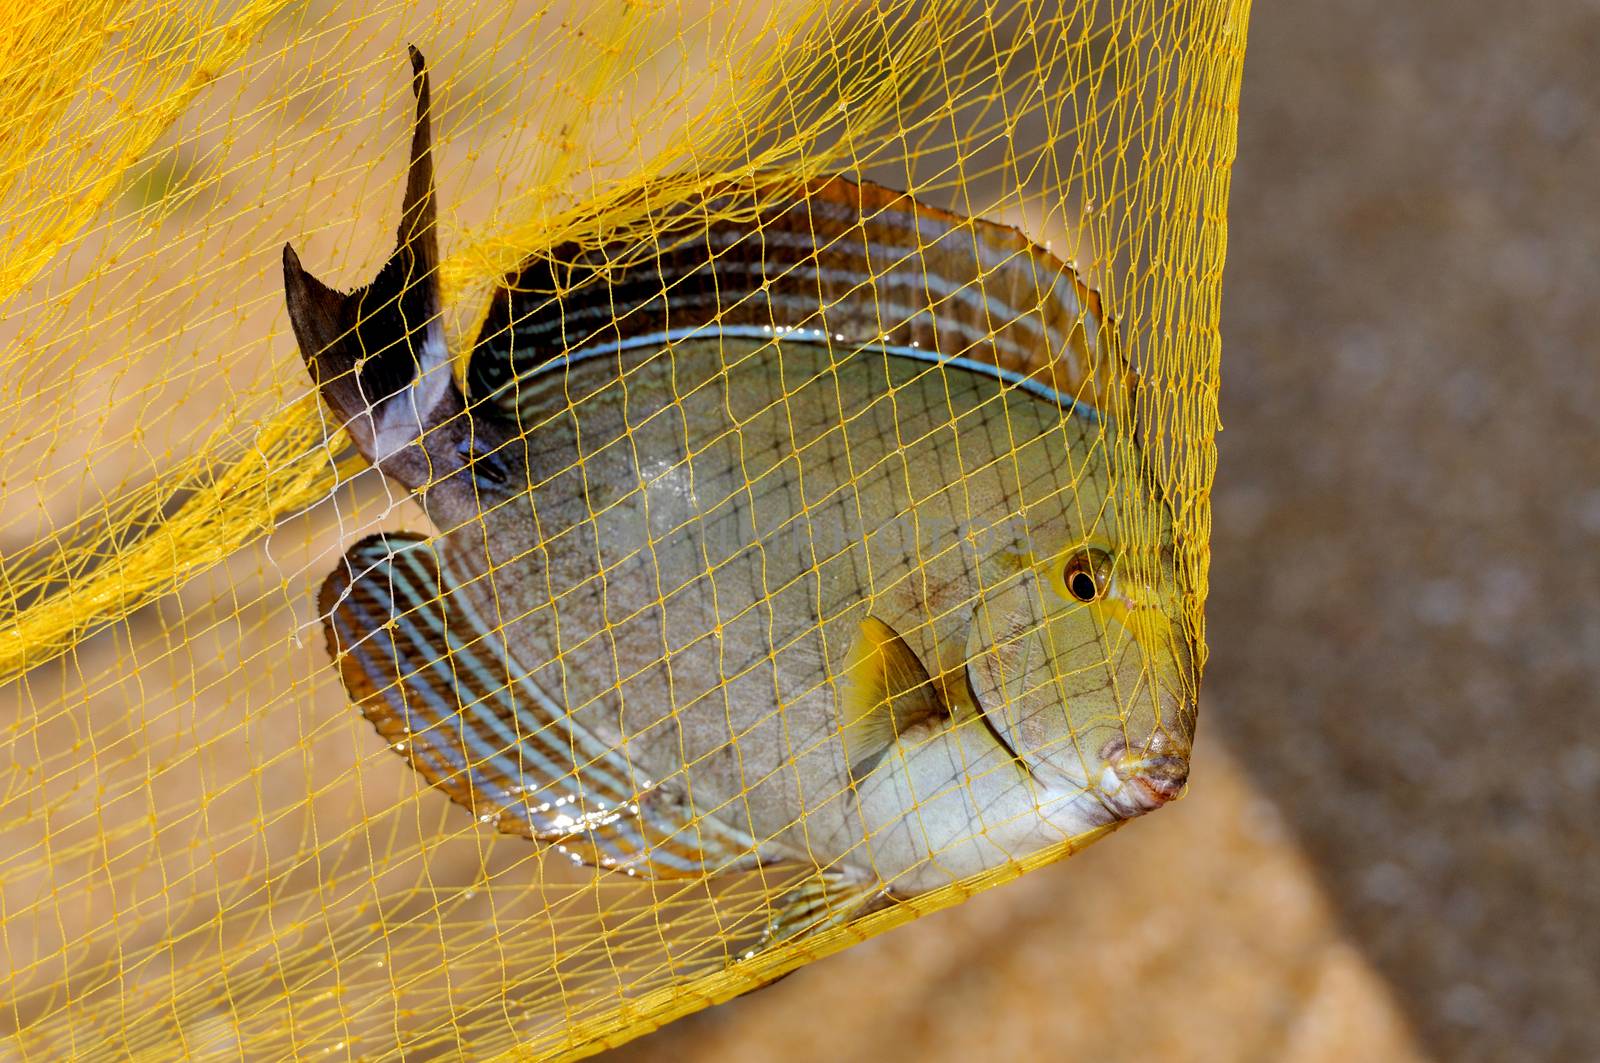 Fish in a fishing nets by byrdyak